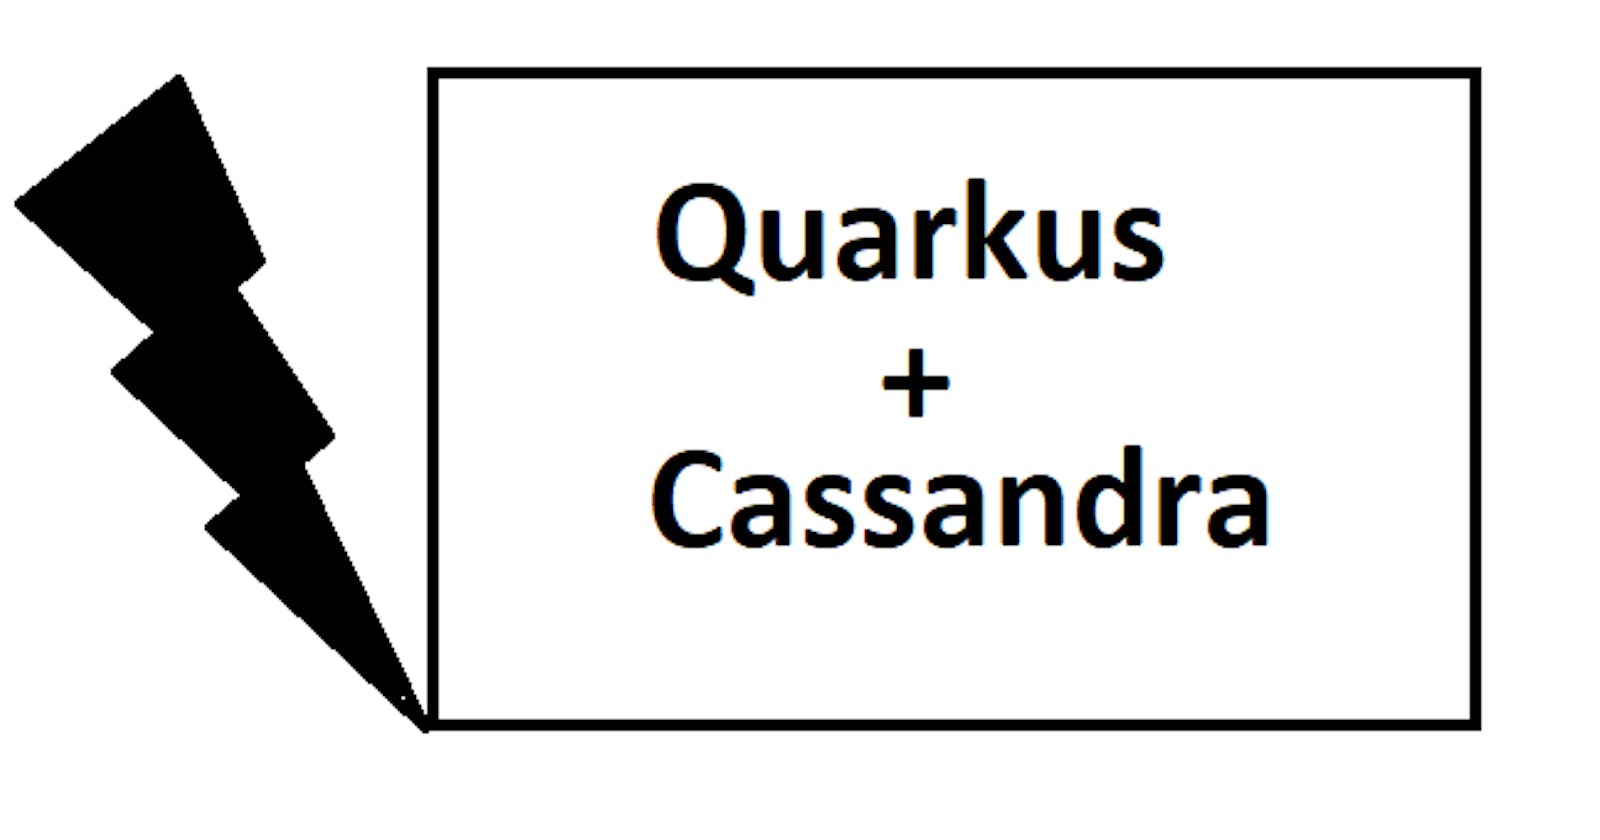 Quarkus + Cassandra  Connection in 5 steps